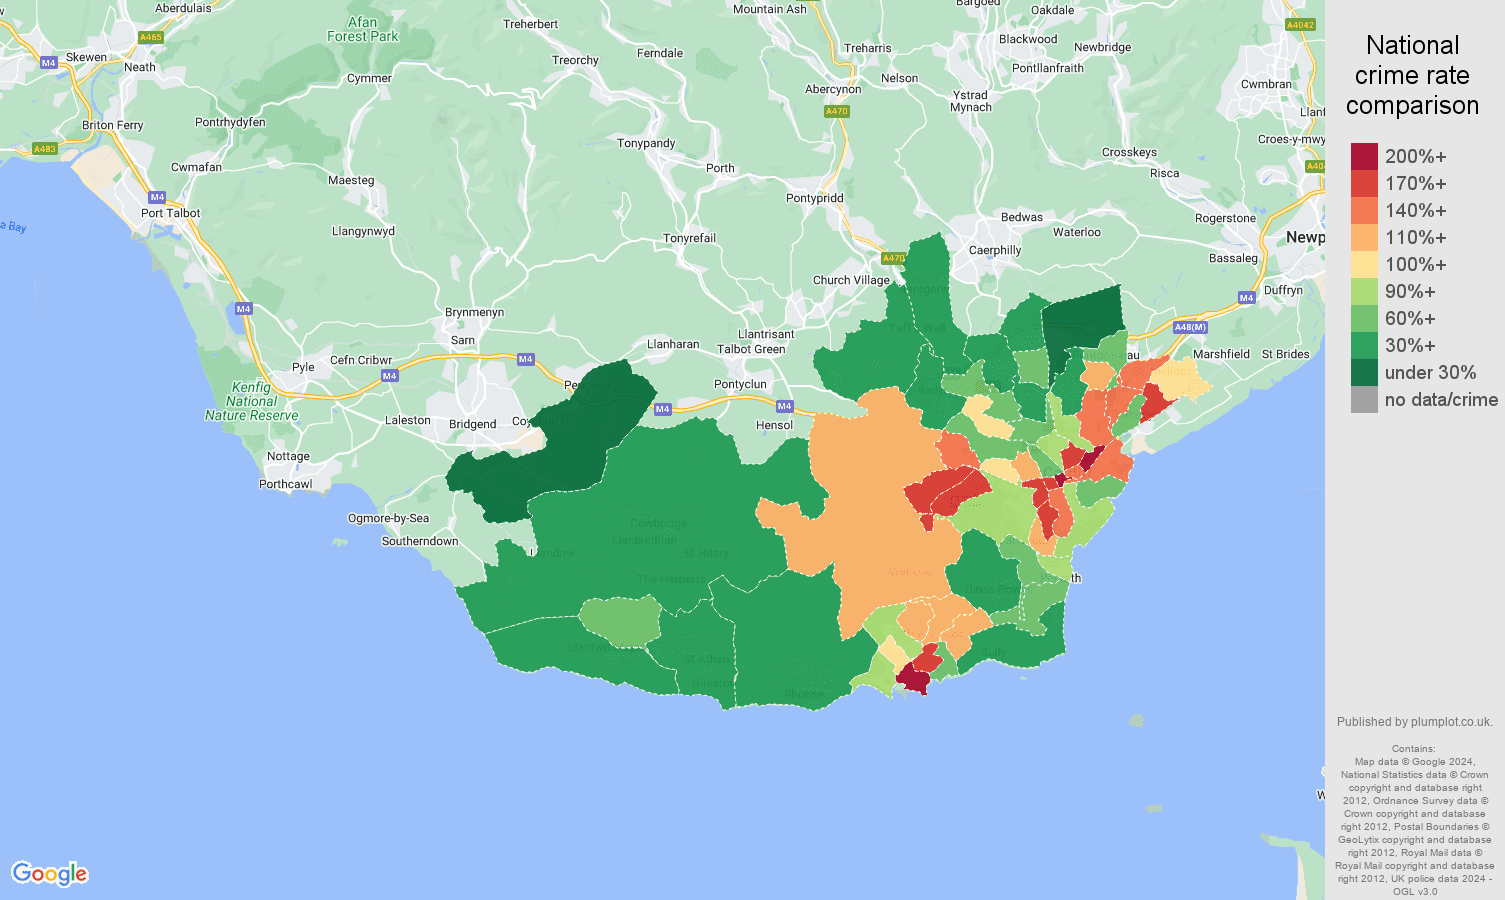 South Glamorgan crime rate comparison map